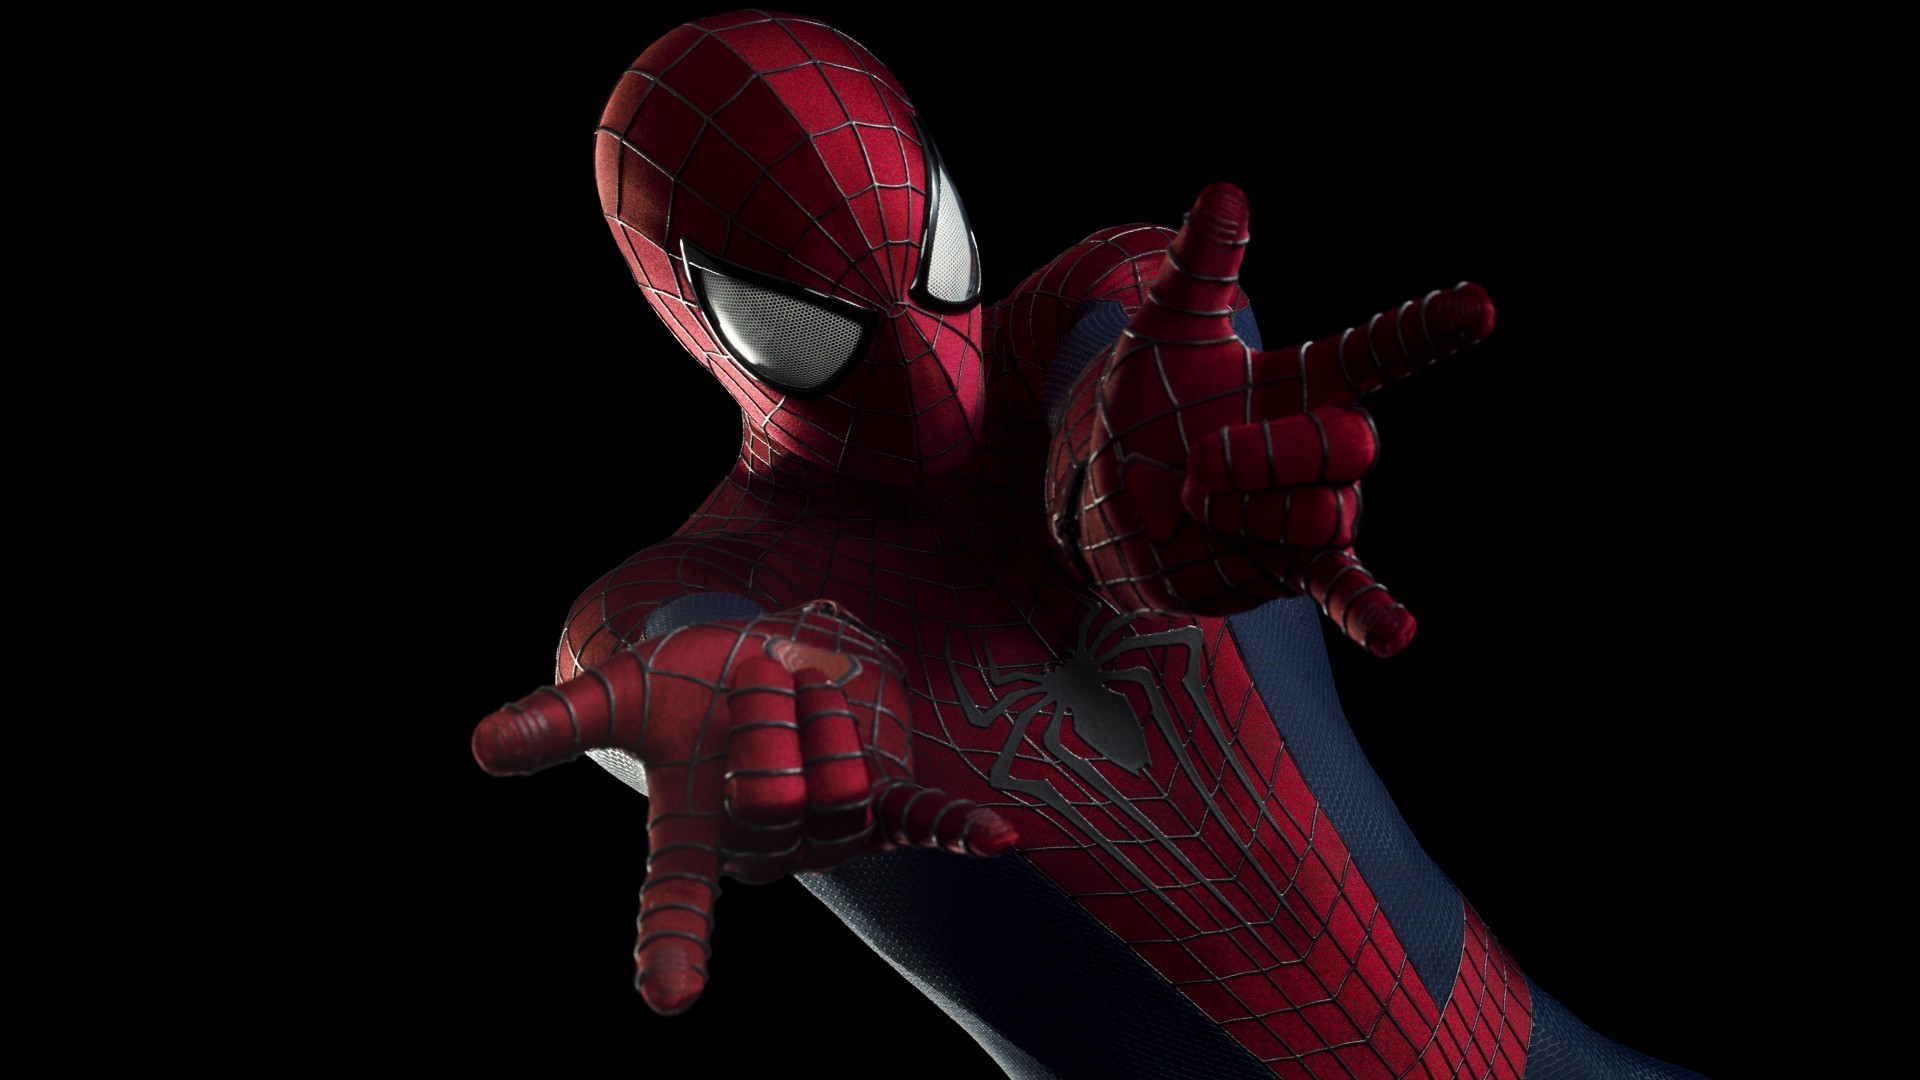 Spider Man, Black Background Wallpapers HD / Desktop and Mobile Backgrounds